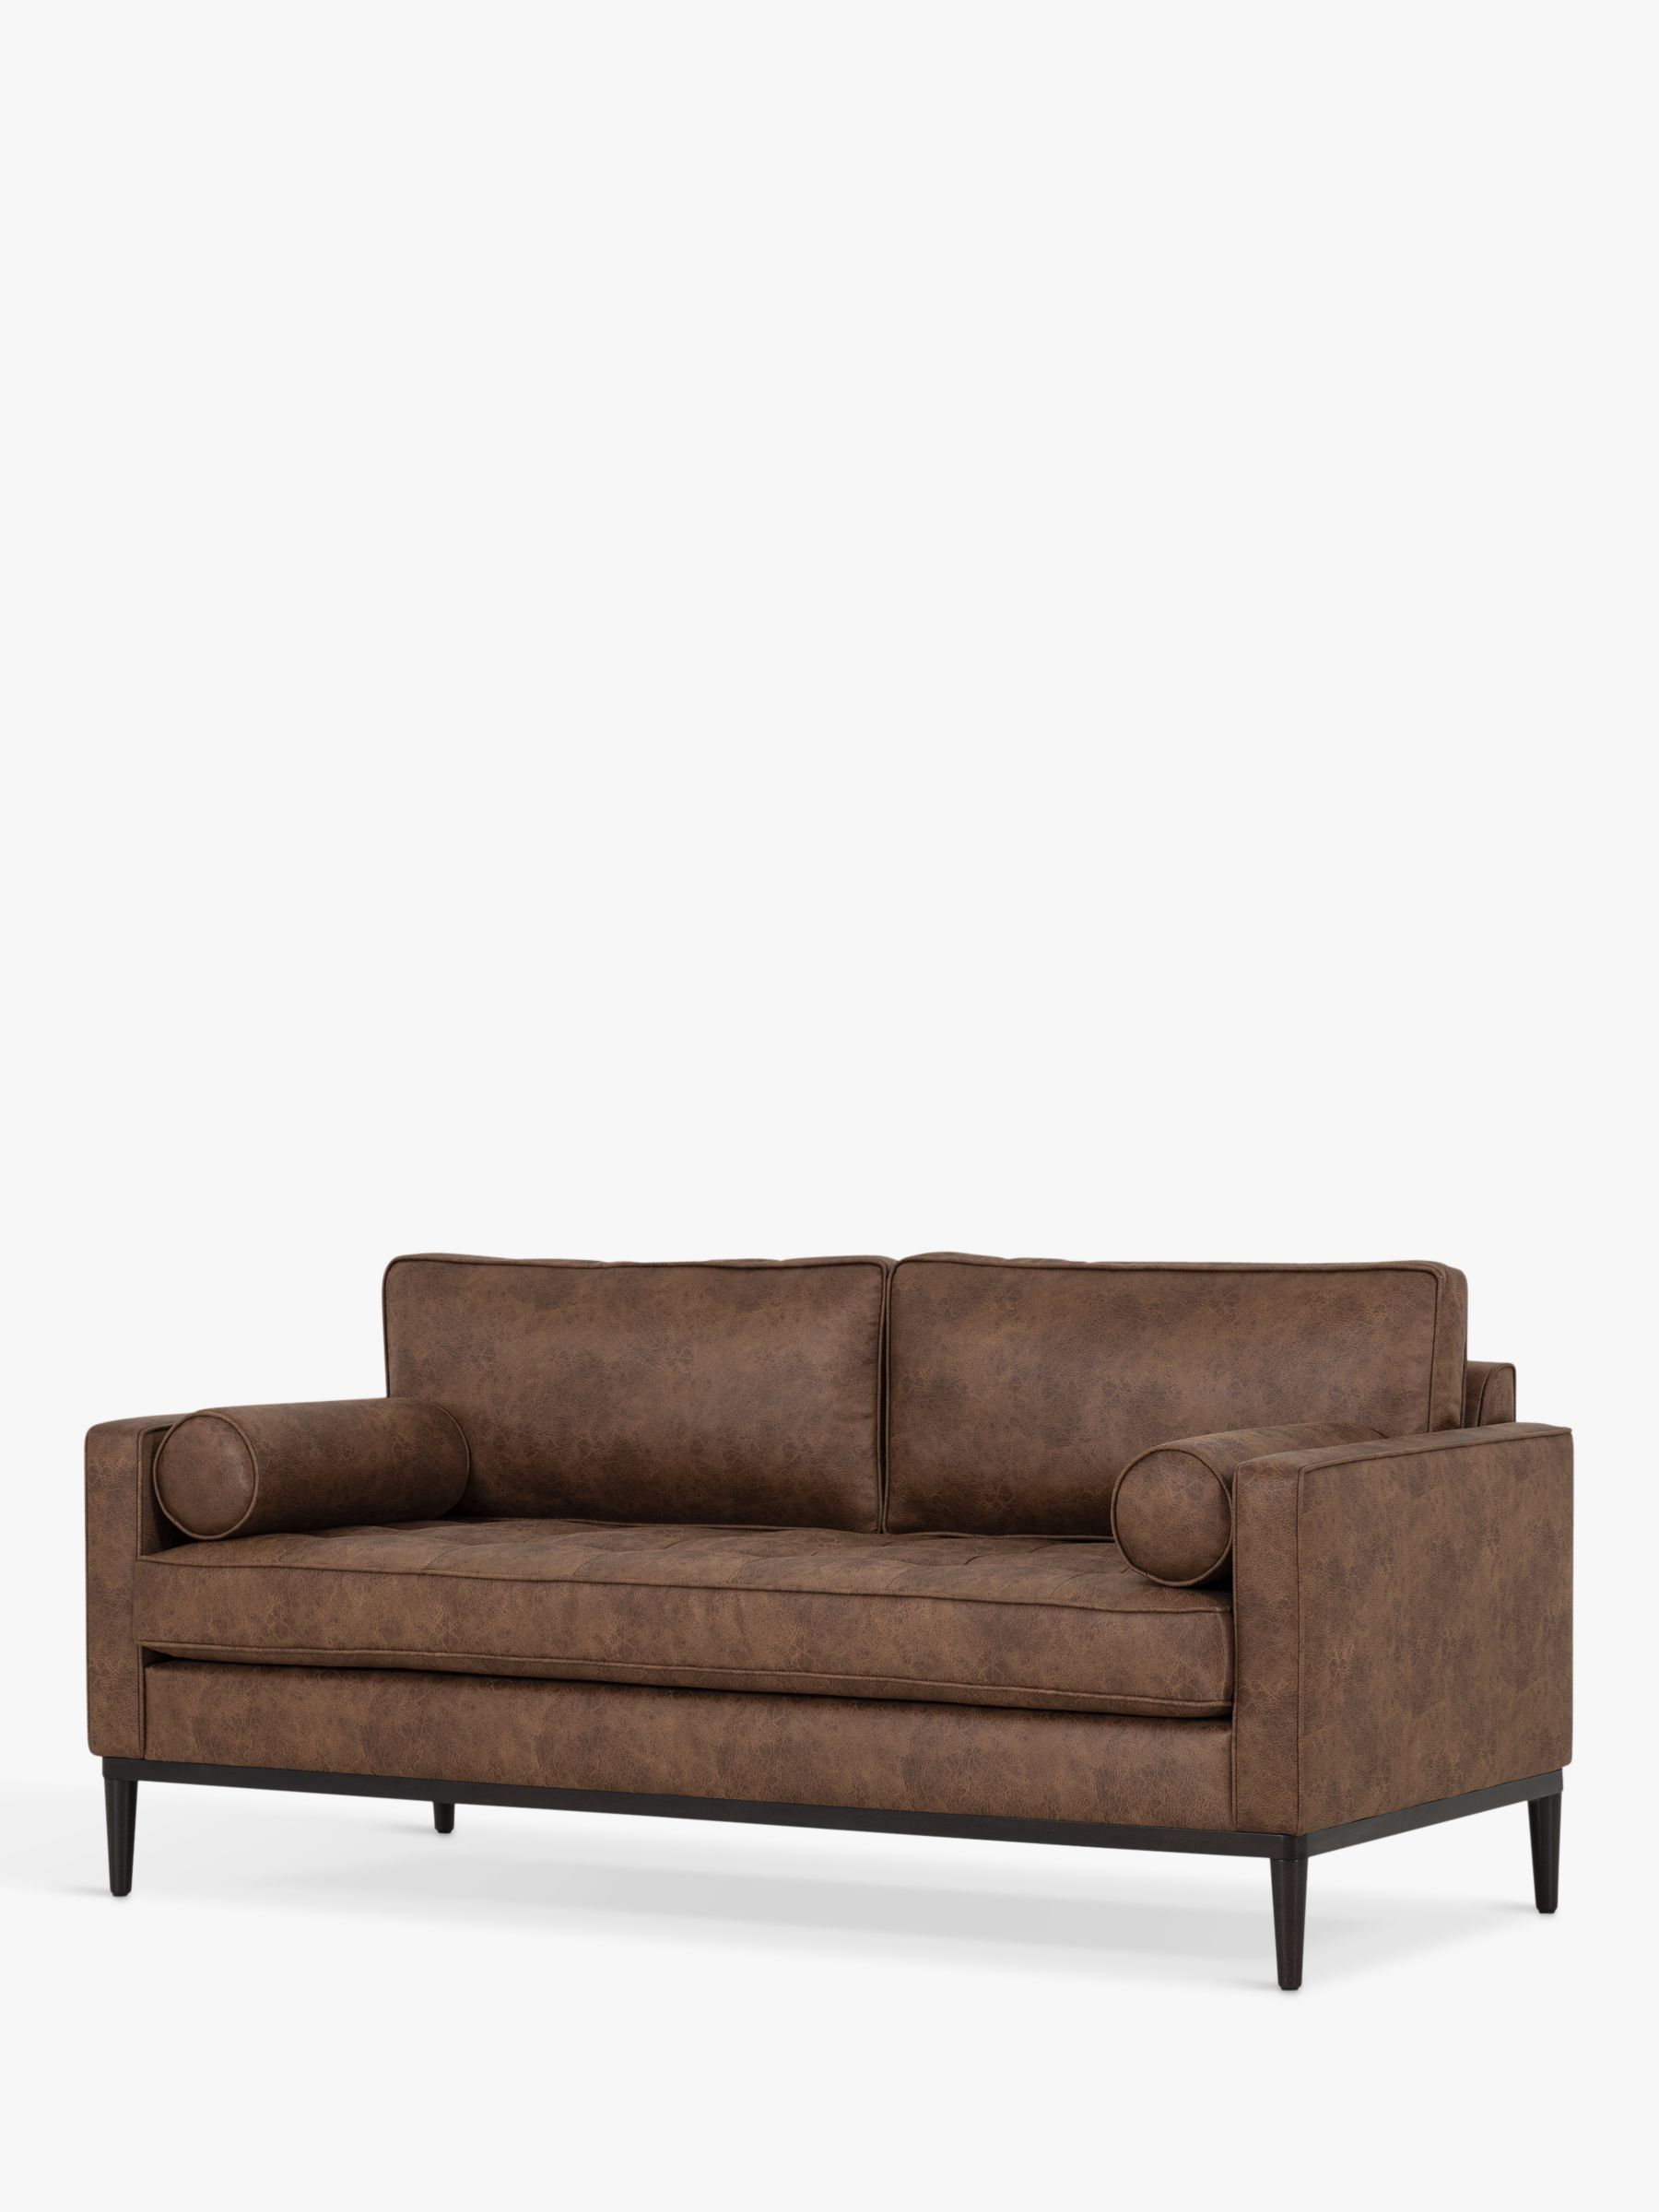 Swyft Model 02 Medium 2 Seater Faux Leather Sofa, Chestnut